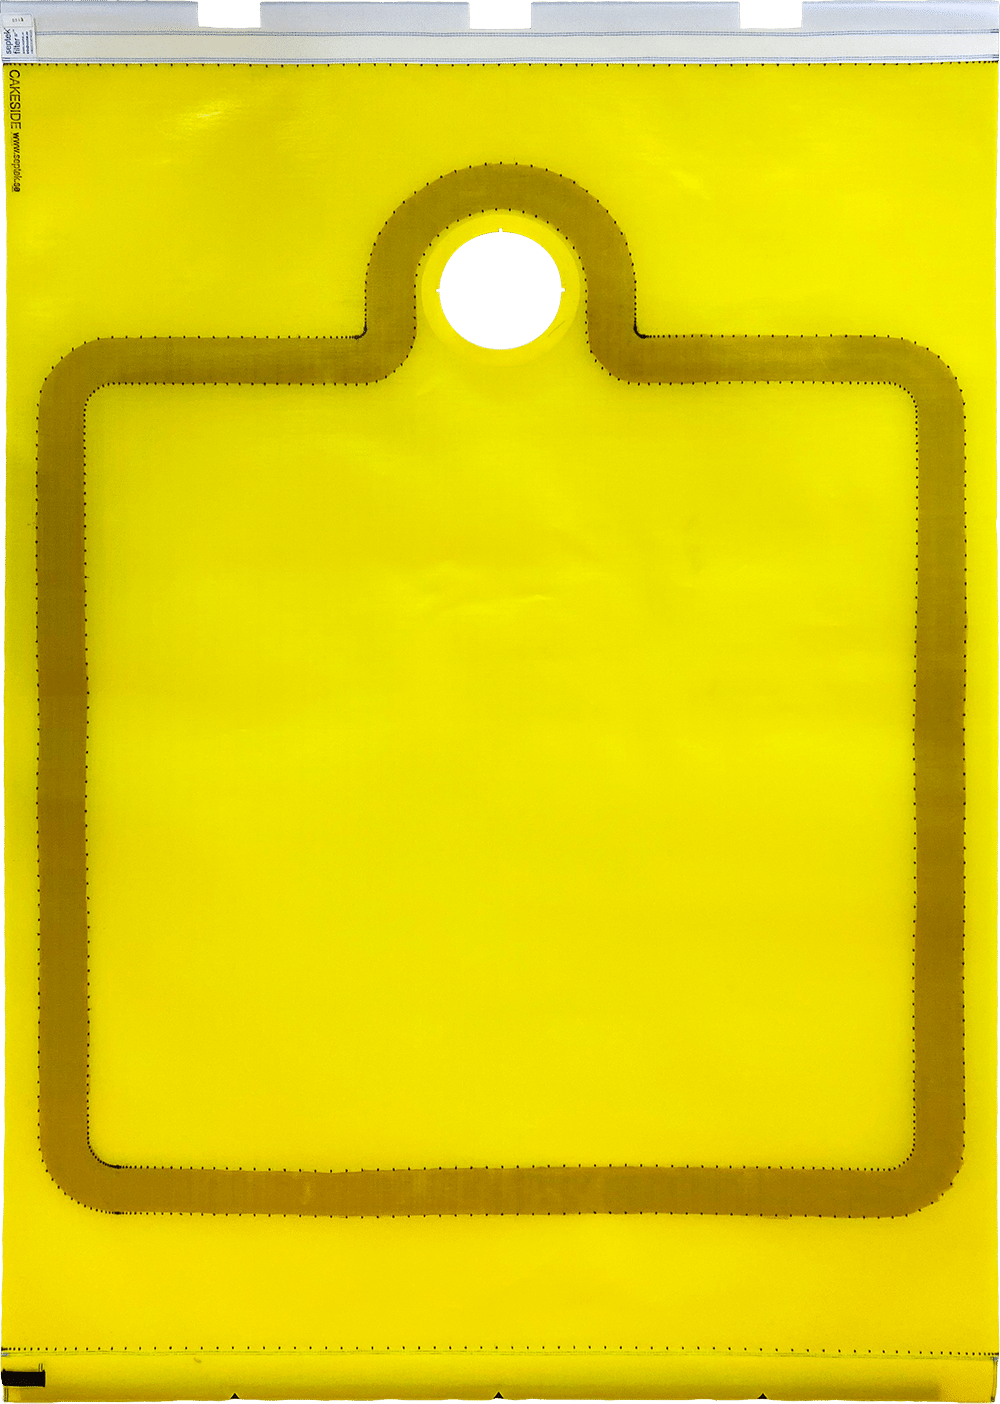 vpa15 filter press cloth with latex edge sealing